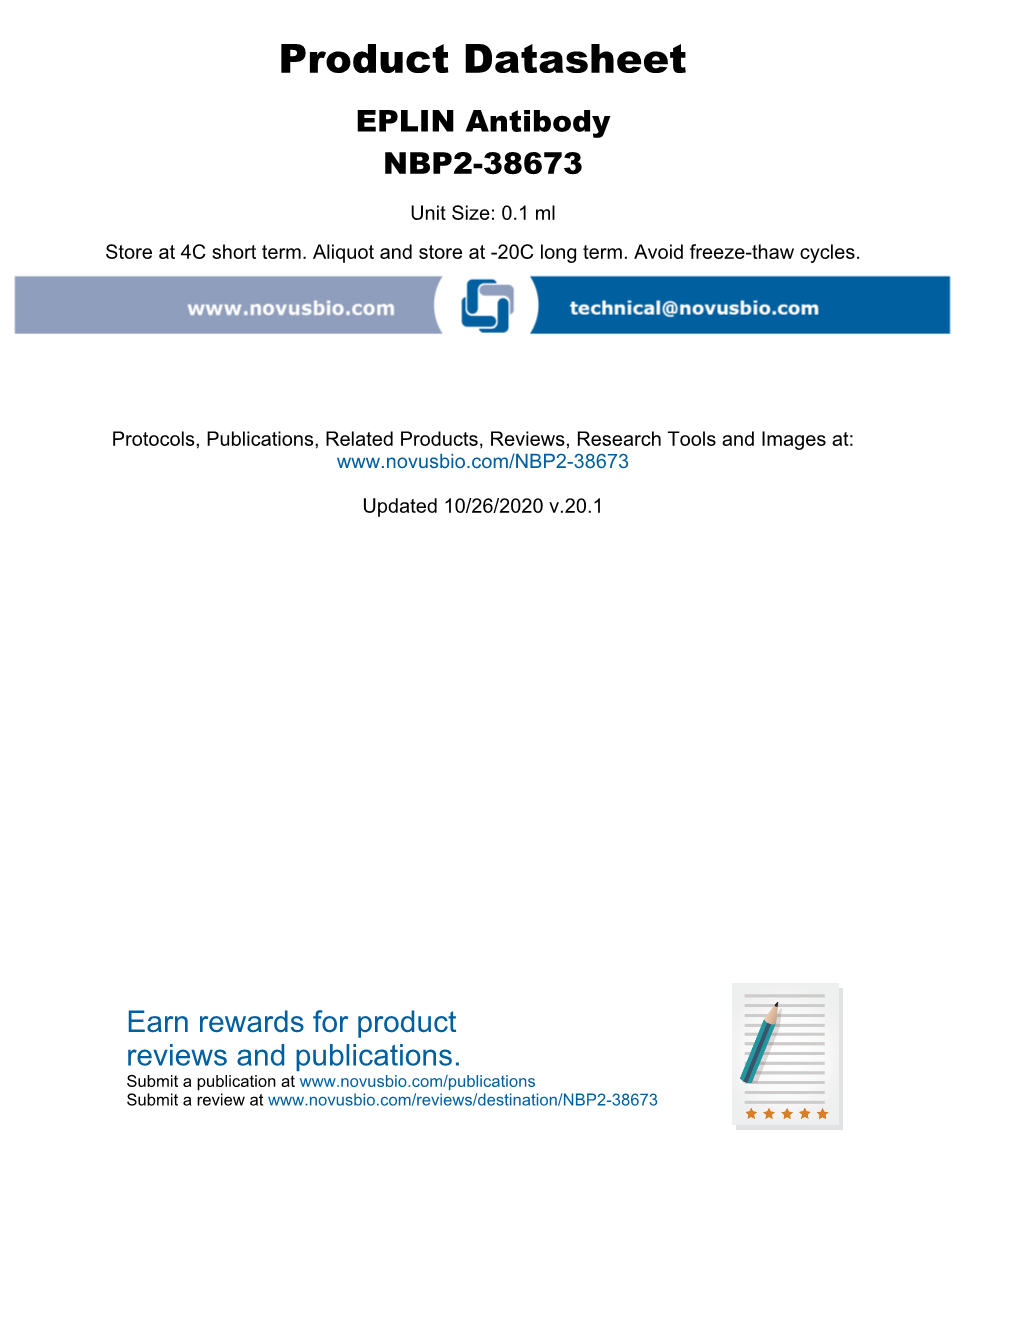 Product Datasheet EPLIN Antibody NBP2-38673